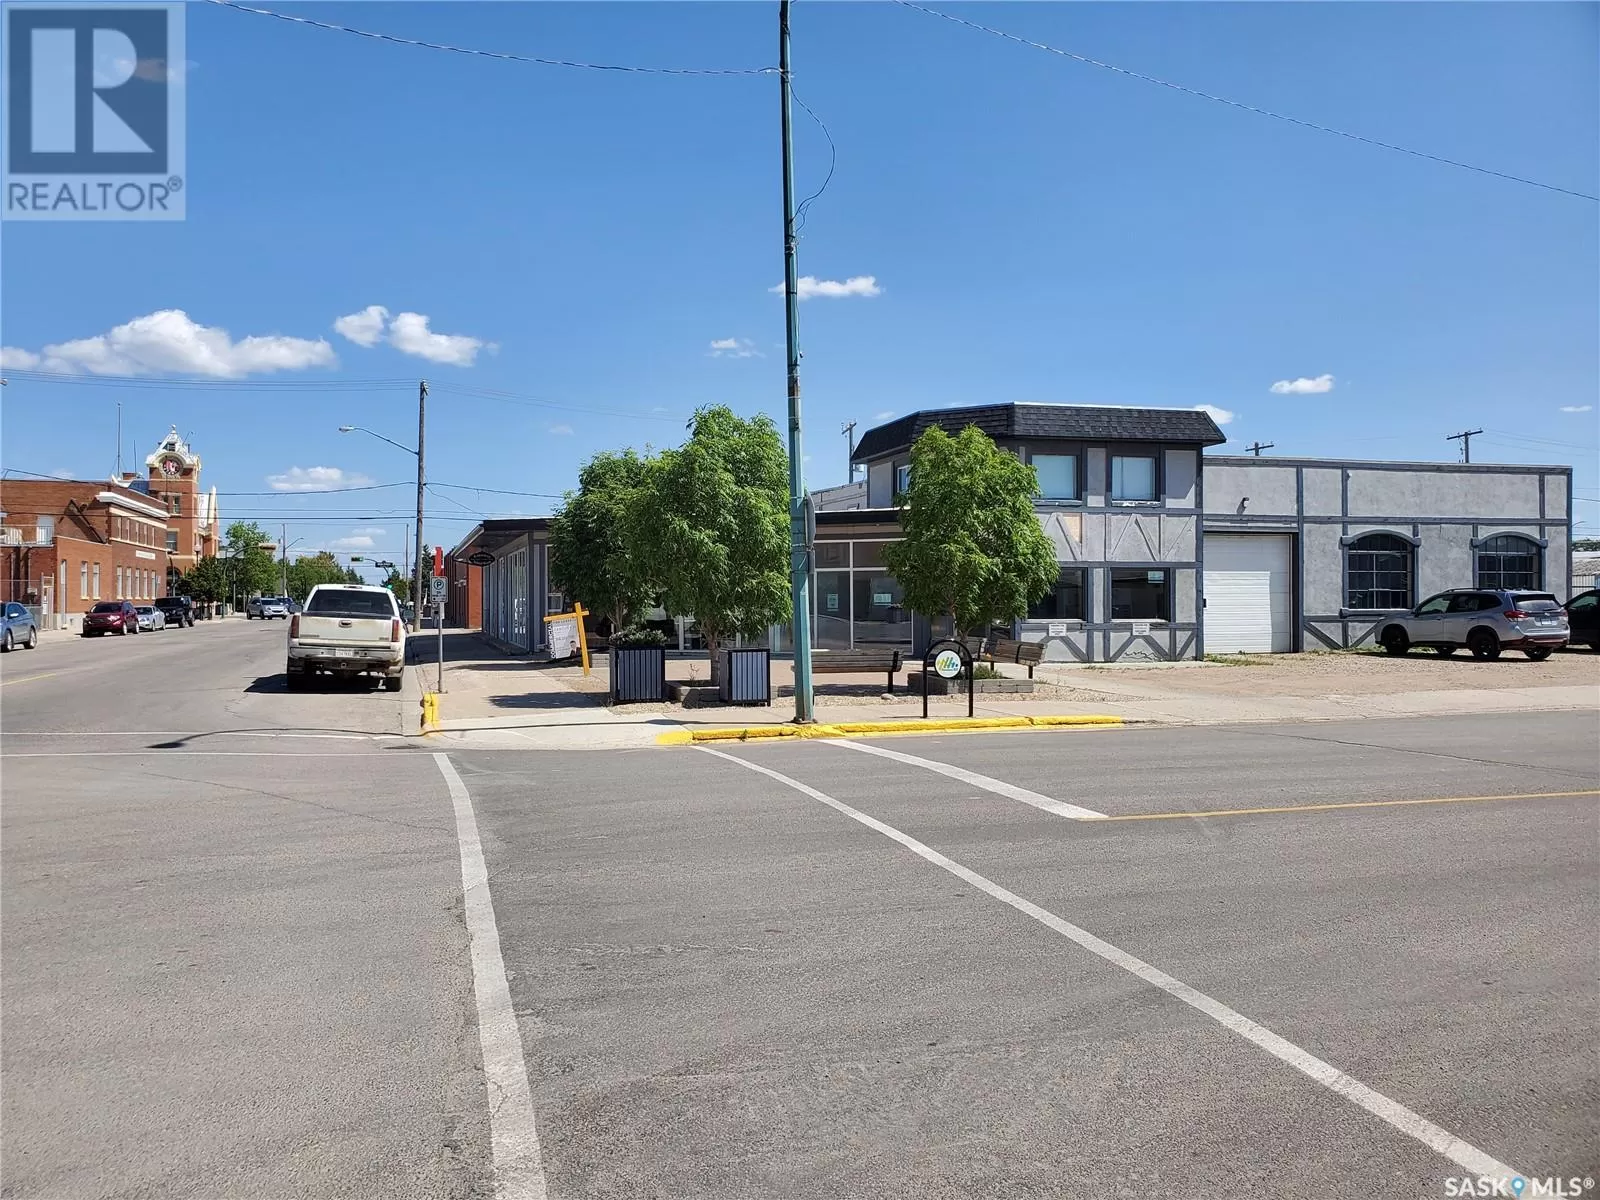 Retail for rent: 520 9th Street, Humboldt, Saskatchewan S0K 2A0